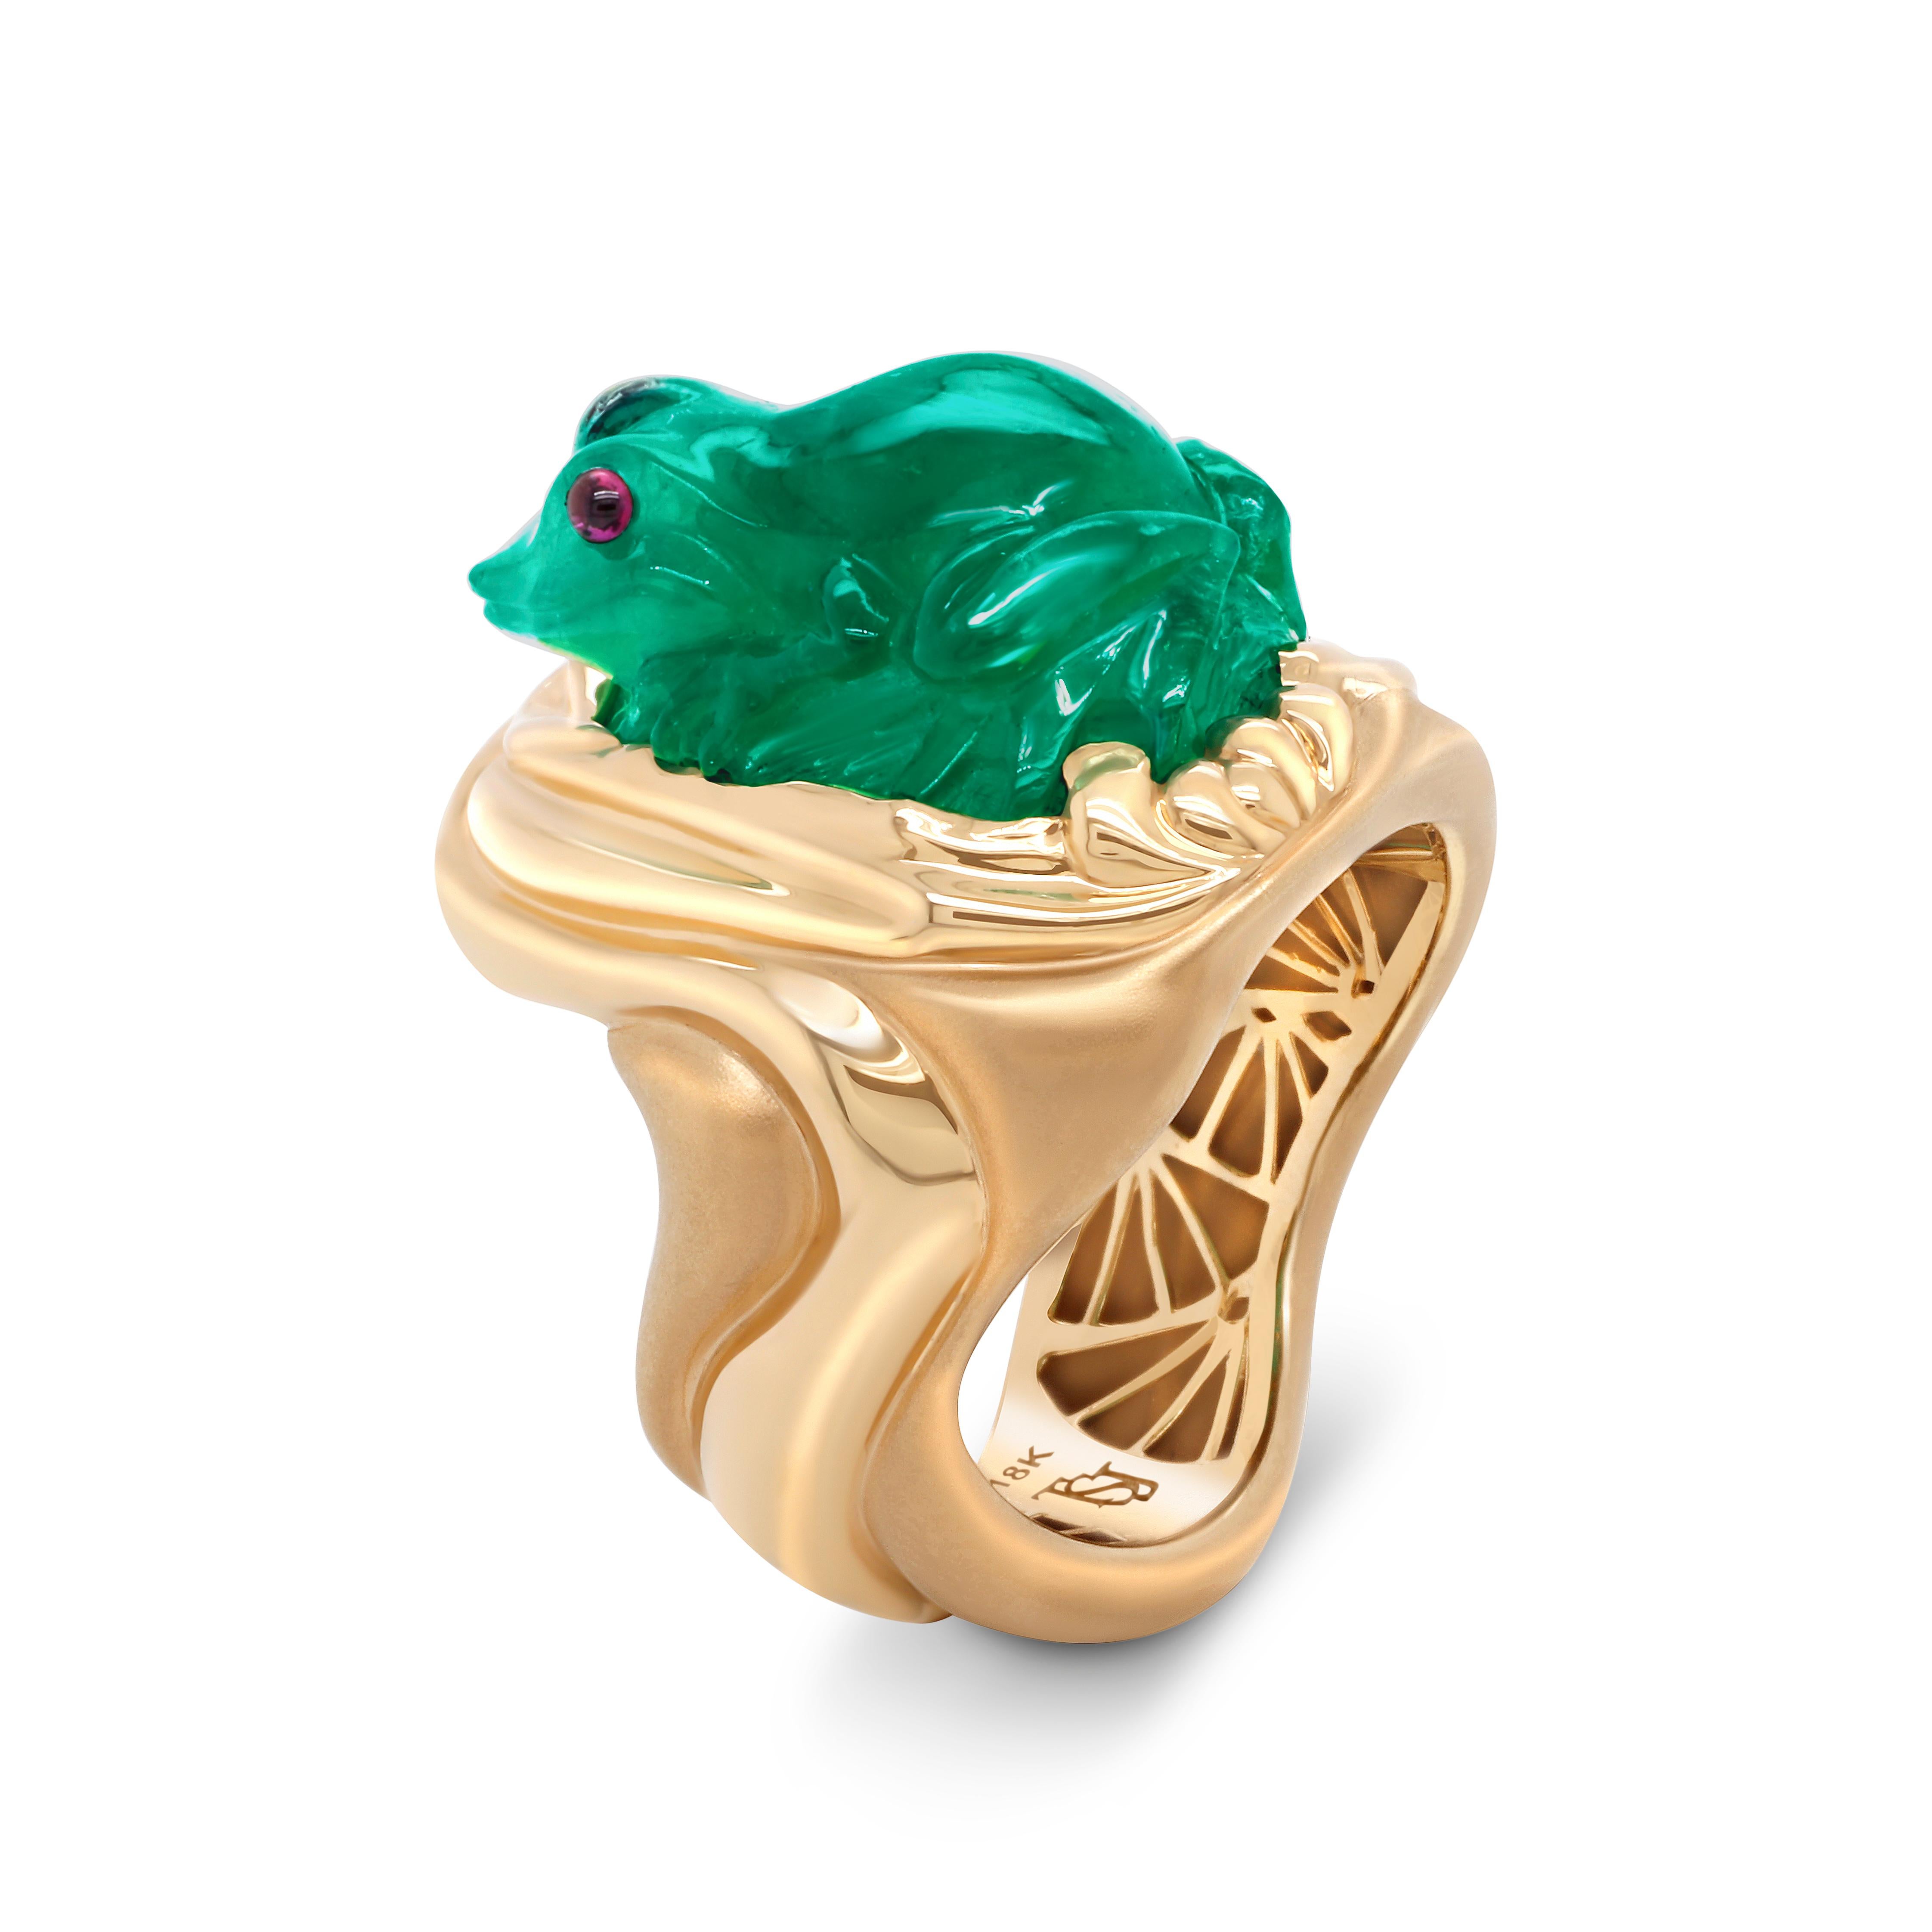 Emerald Cut 16.67 Carat Carved Russian Emerald 18 Karat Yellow Gold Cocktail Fashion Ring